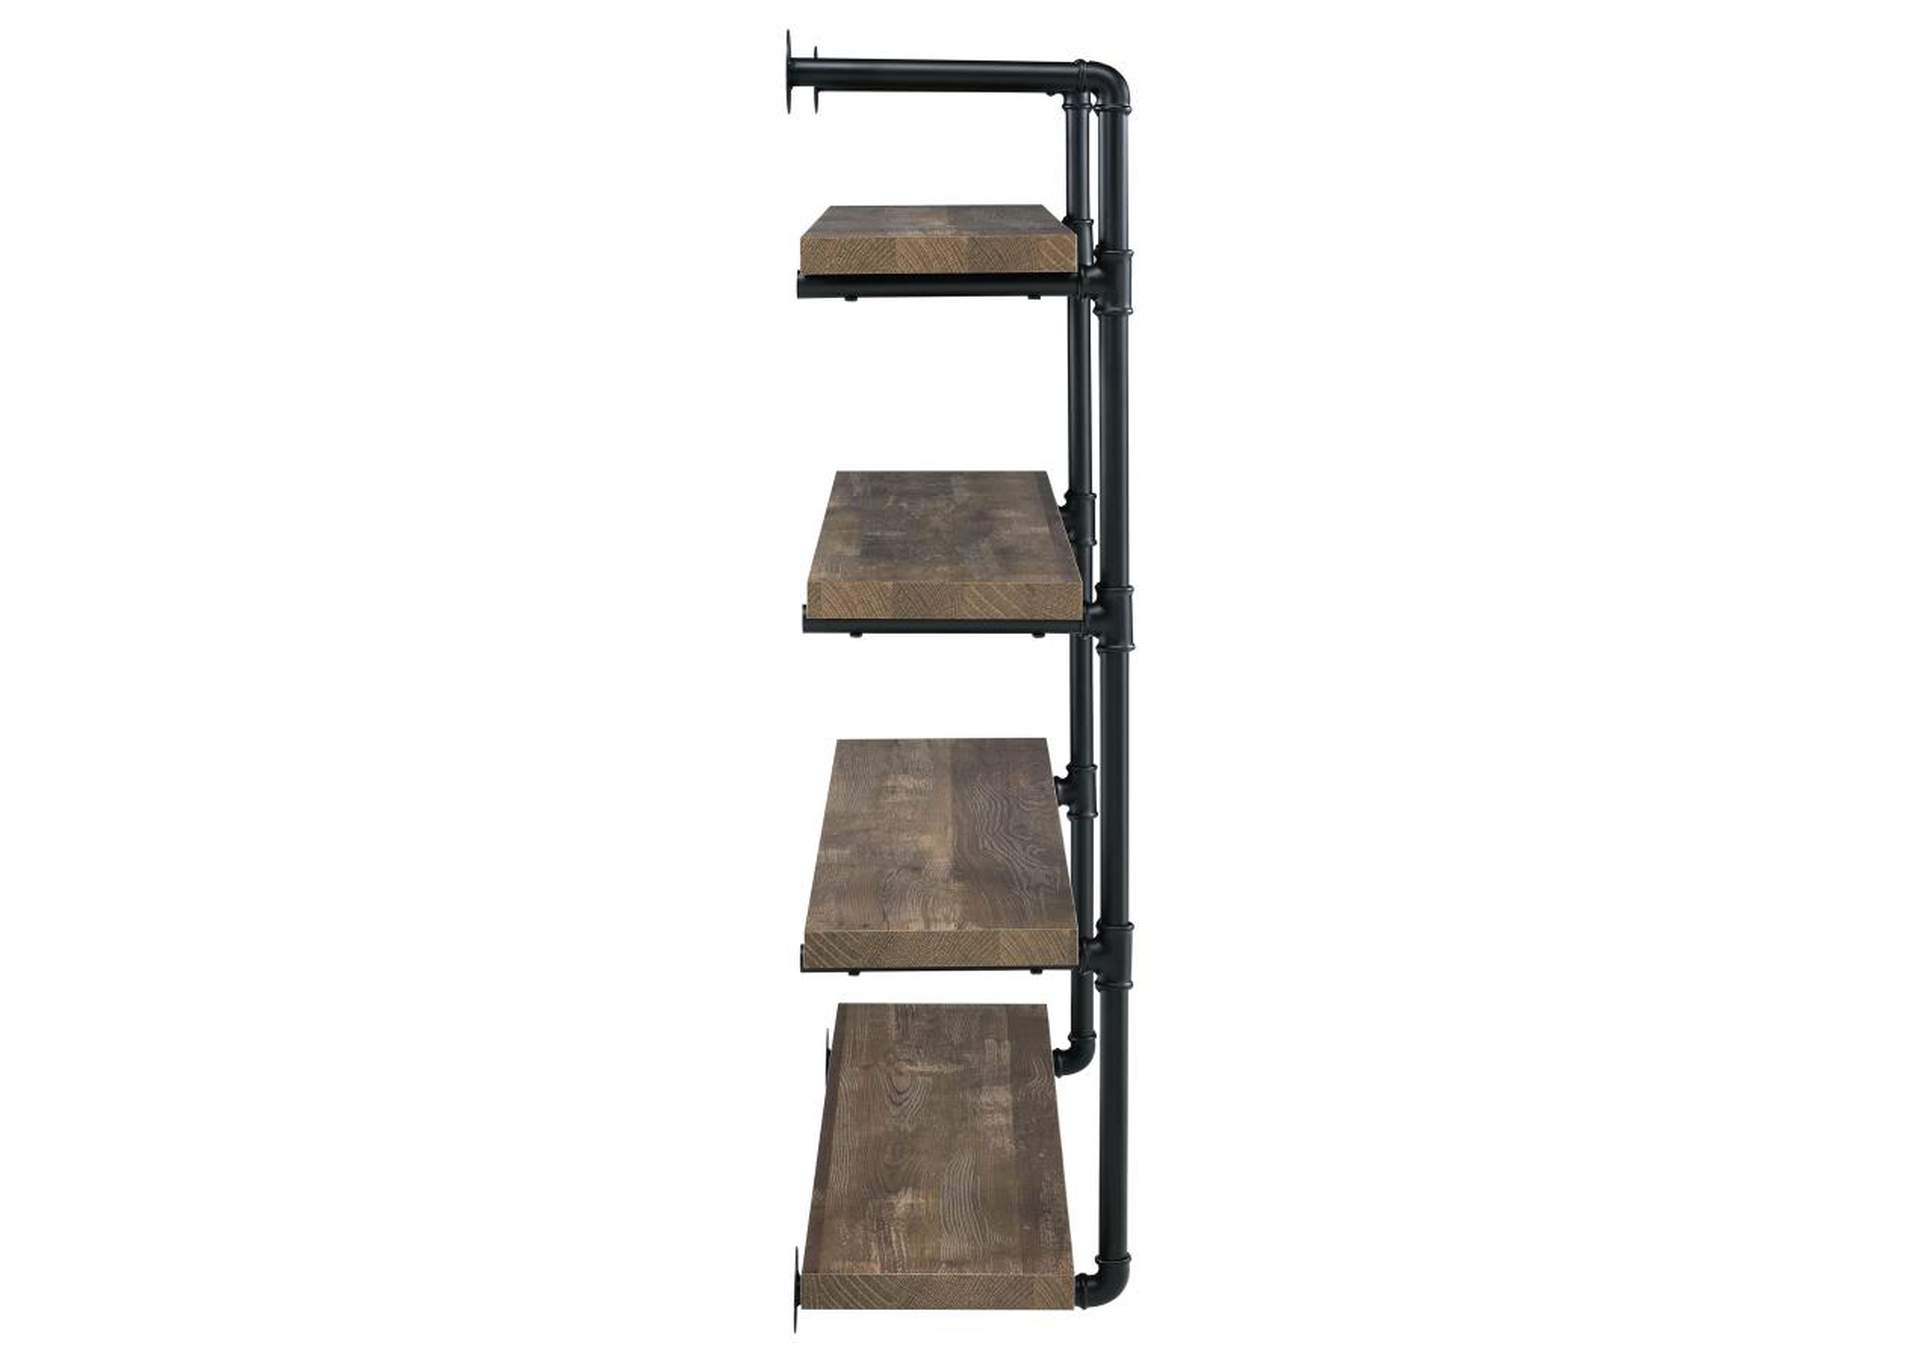 Elmcrest 40-inch Wall Shelf Black and Rustic Oak,Coaster Furniture